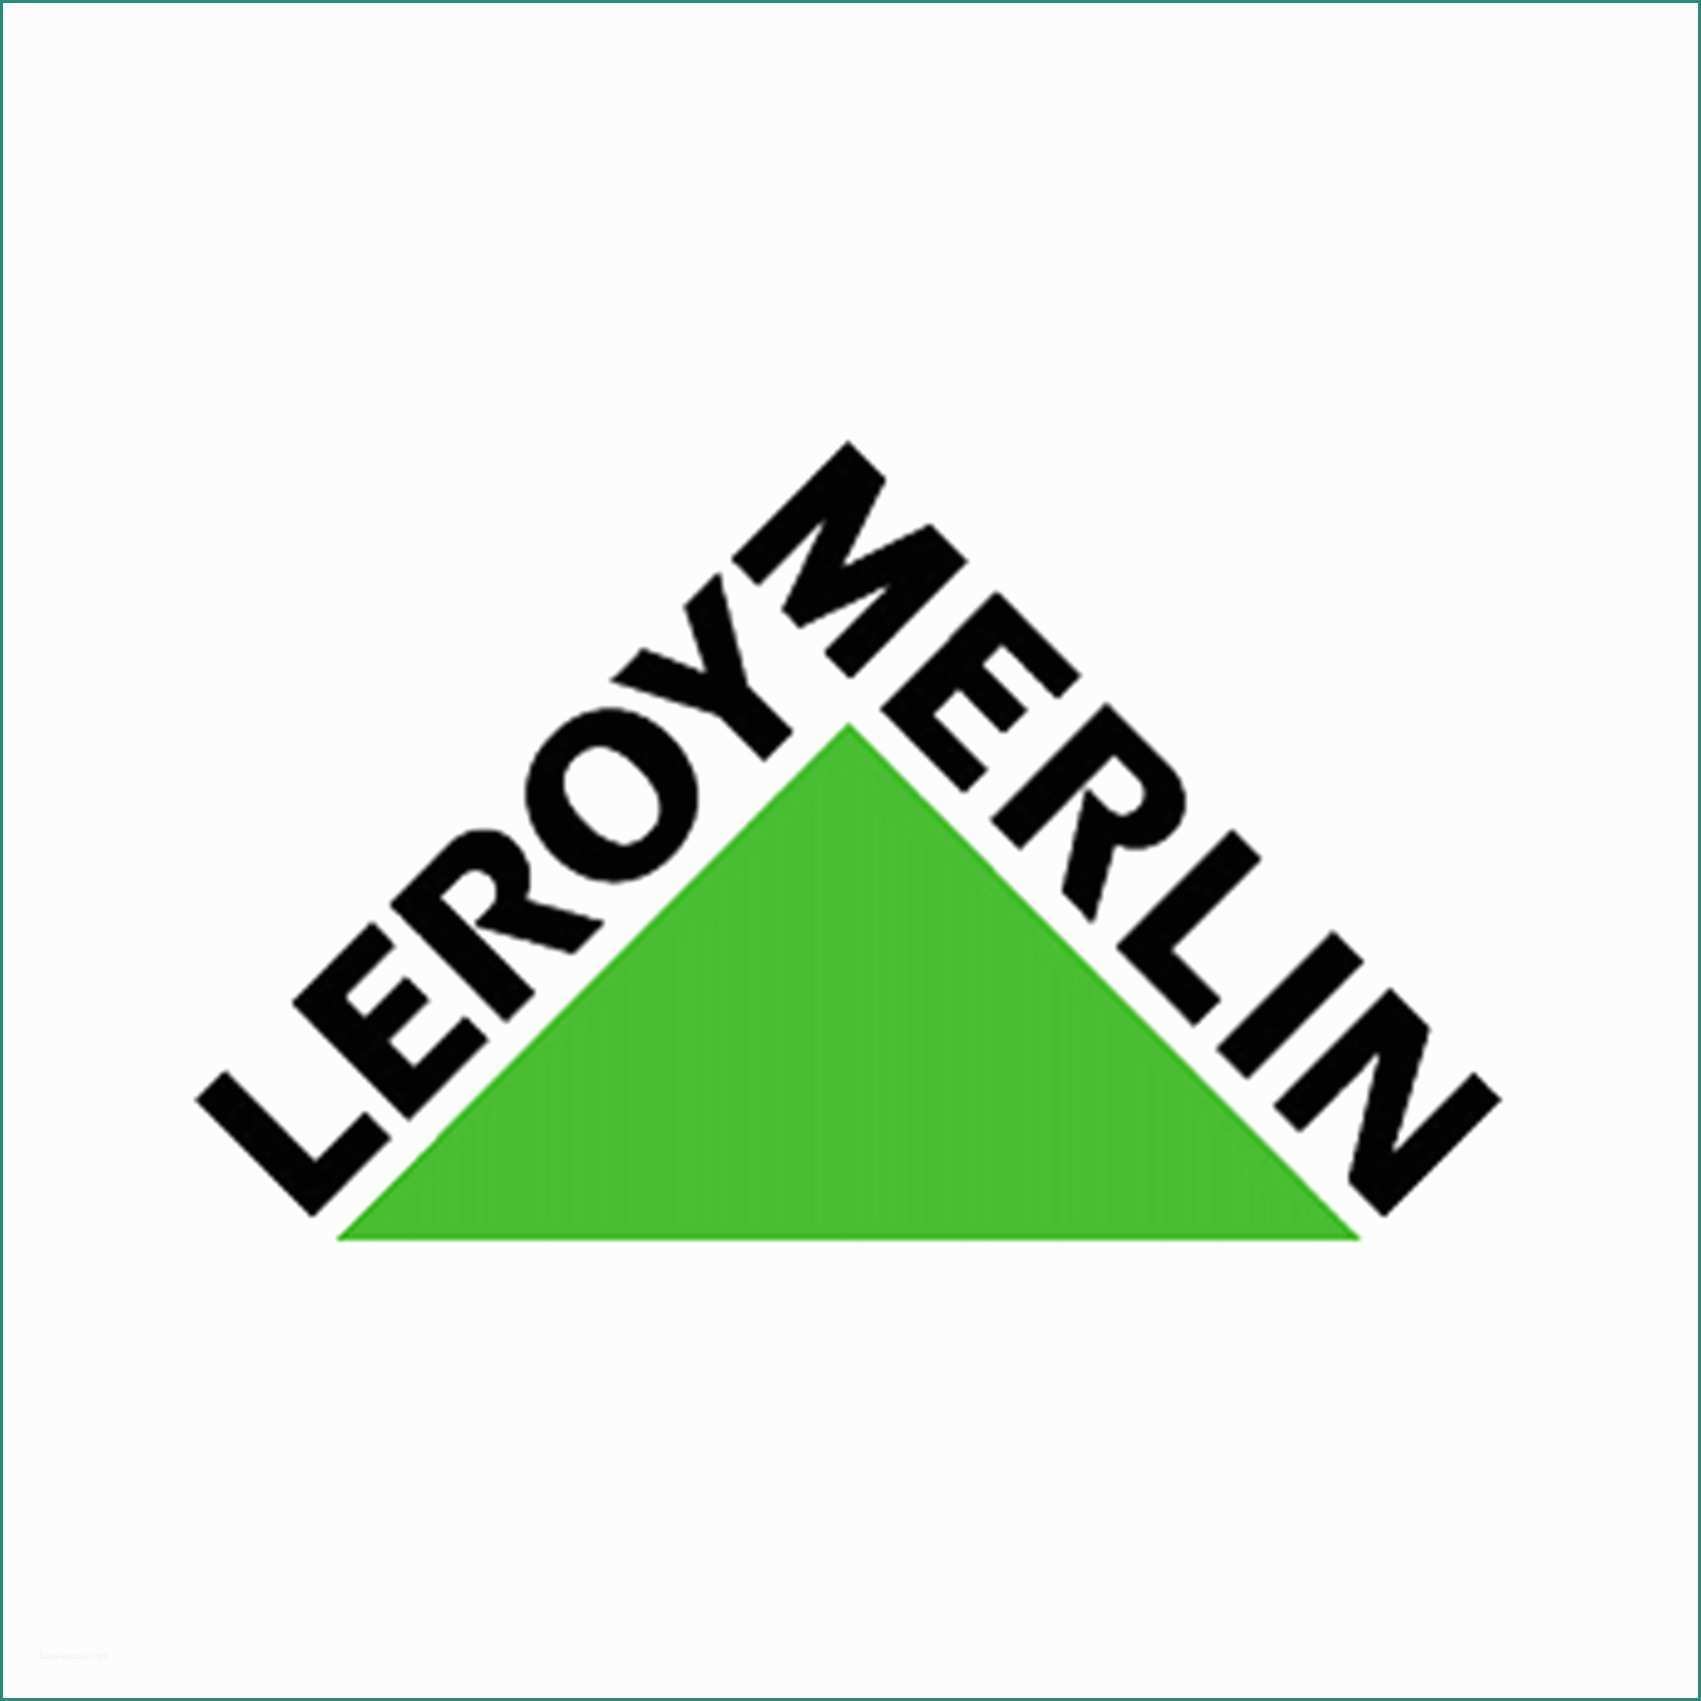 Passacavi Scrivania Leroy Merlin E Leroy Merlin Porte A S Parsa Porte Scale E Da Interno Battente